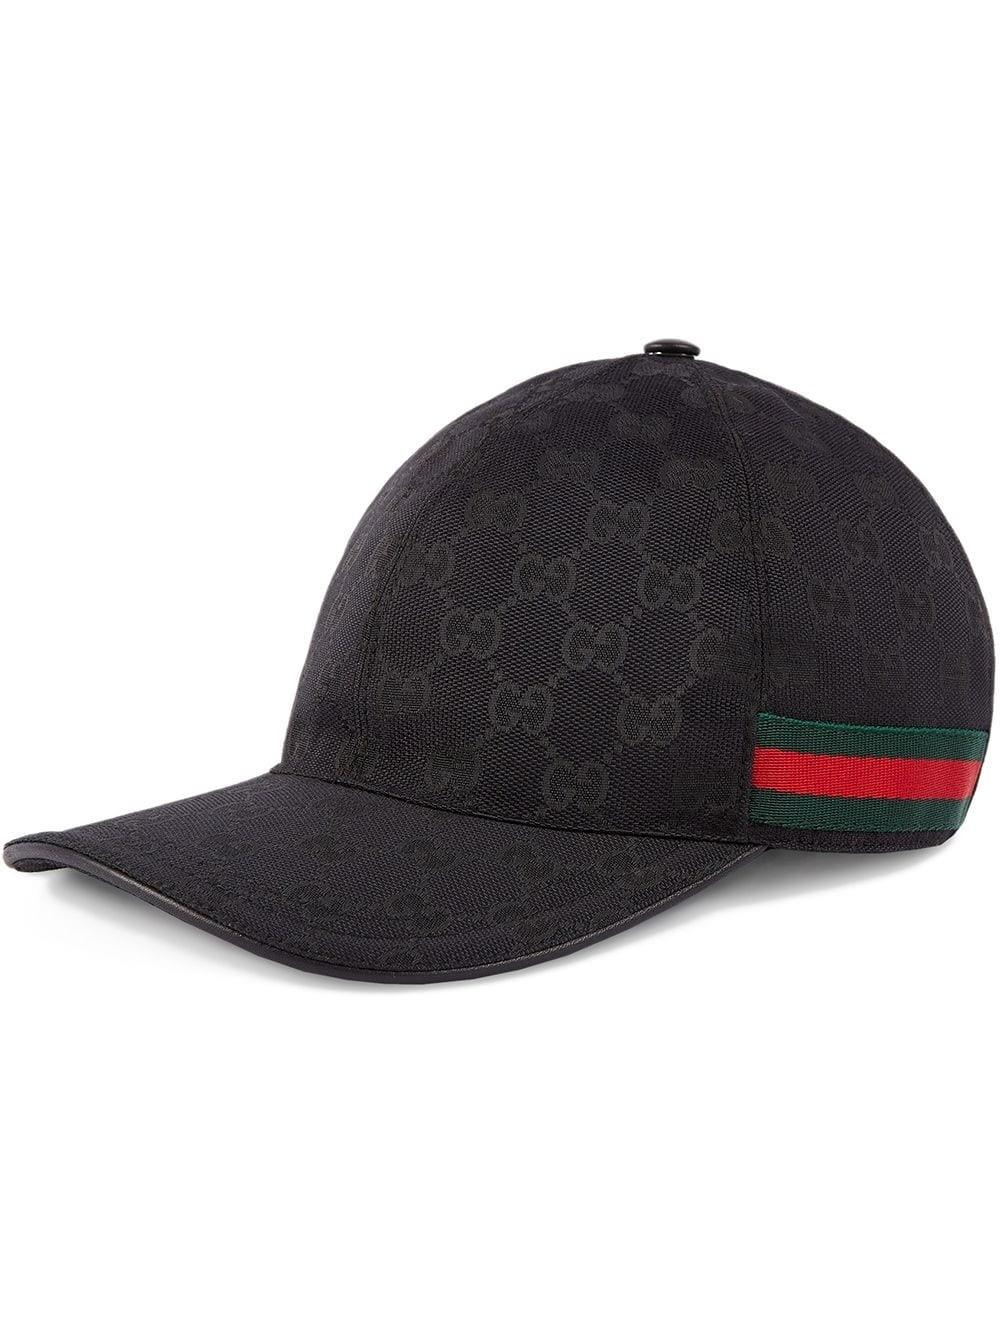 Gucci Original GG Canvas Baseball Hat in Black - Save 42% - Lyst